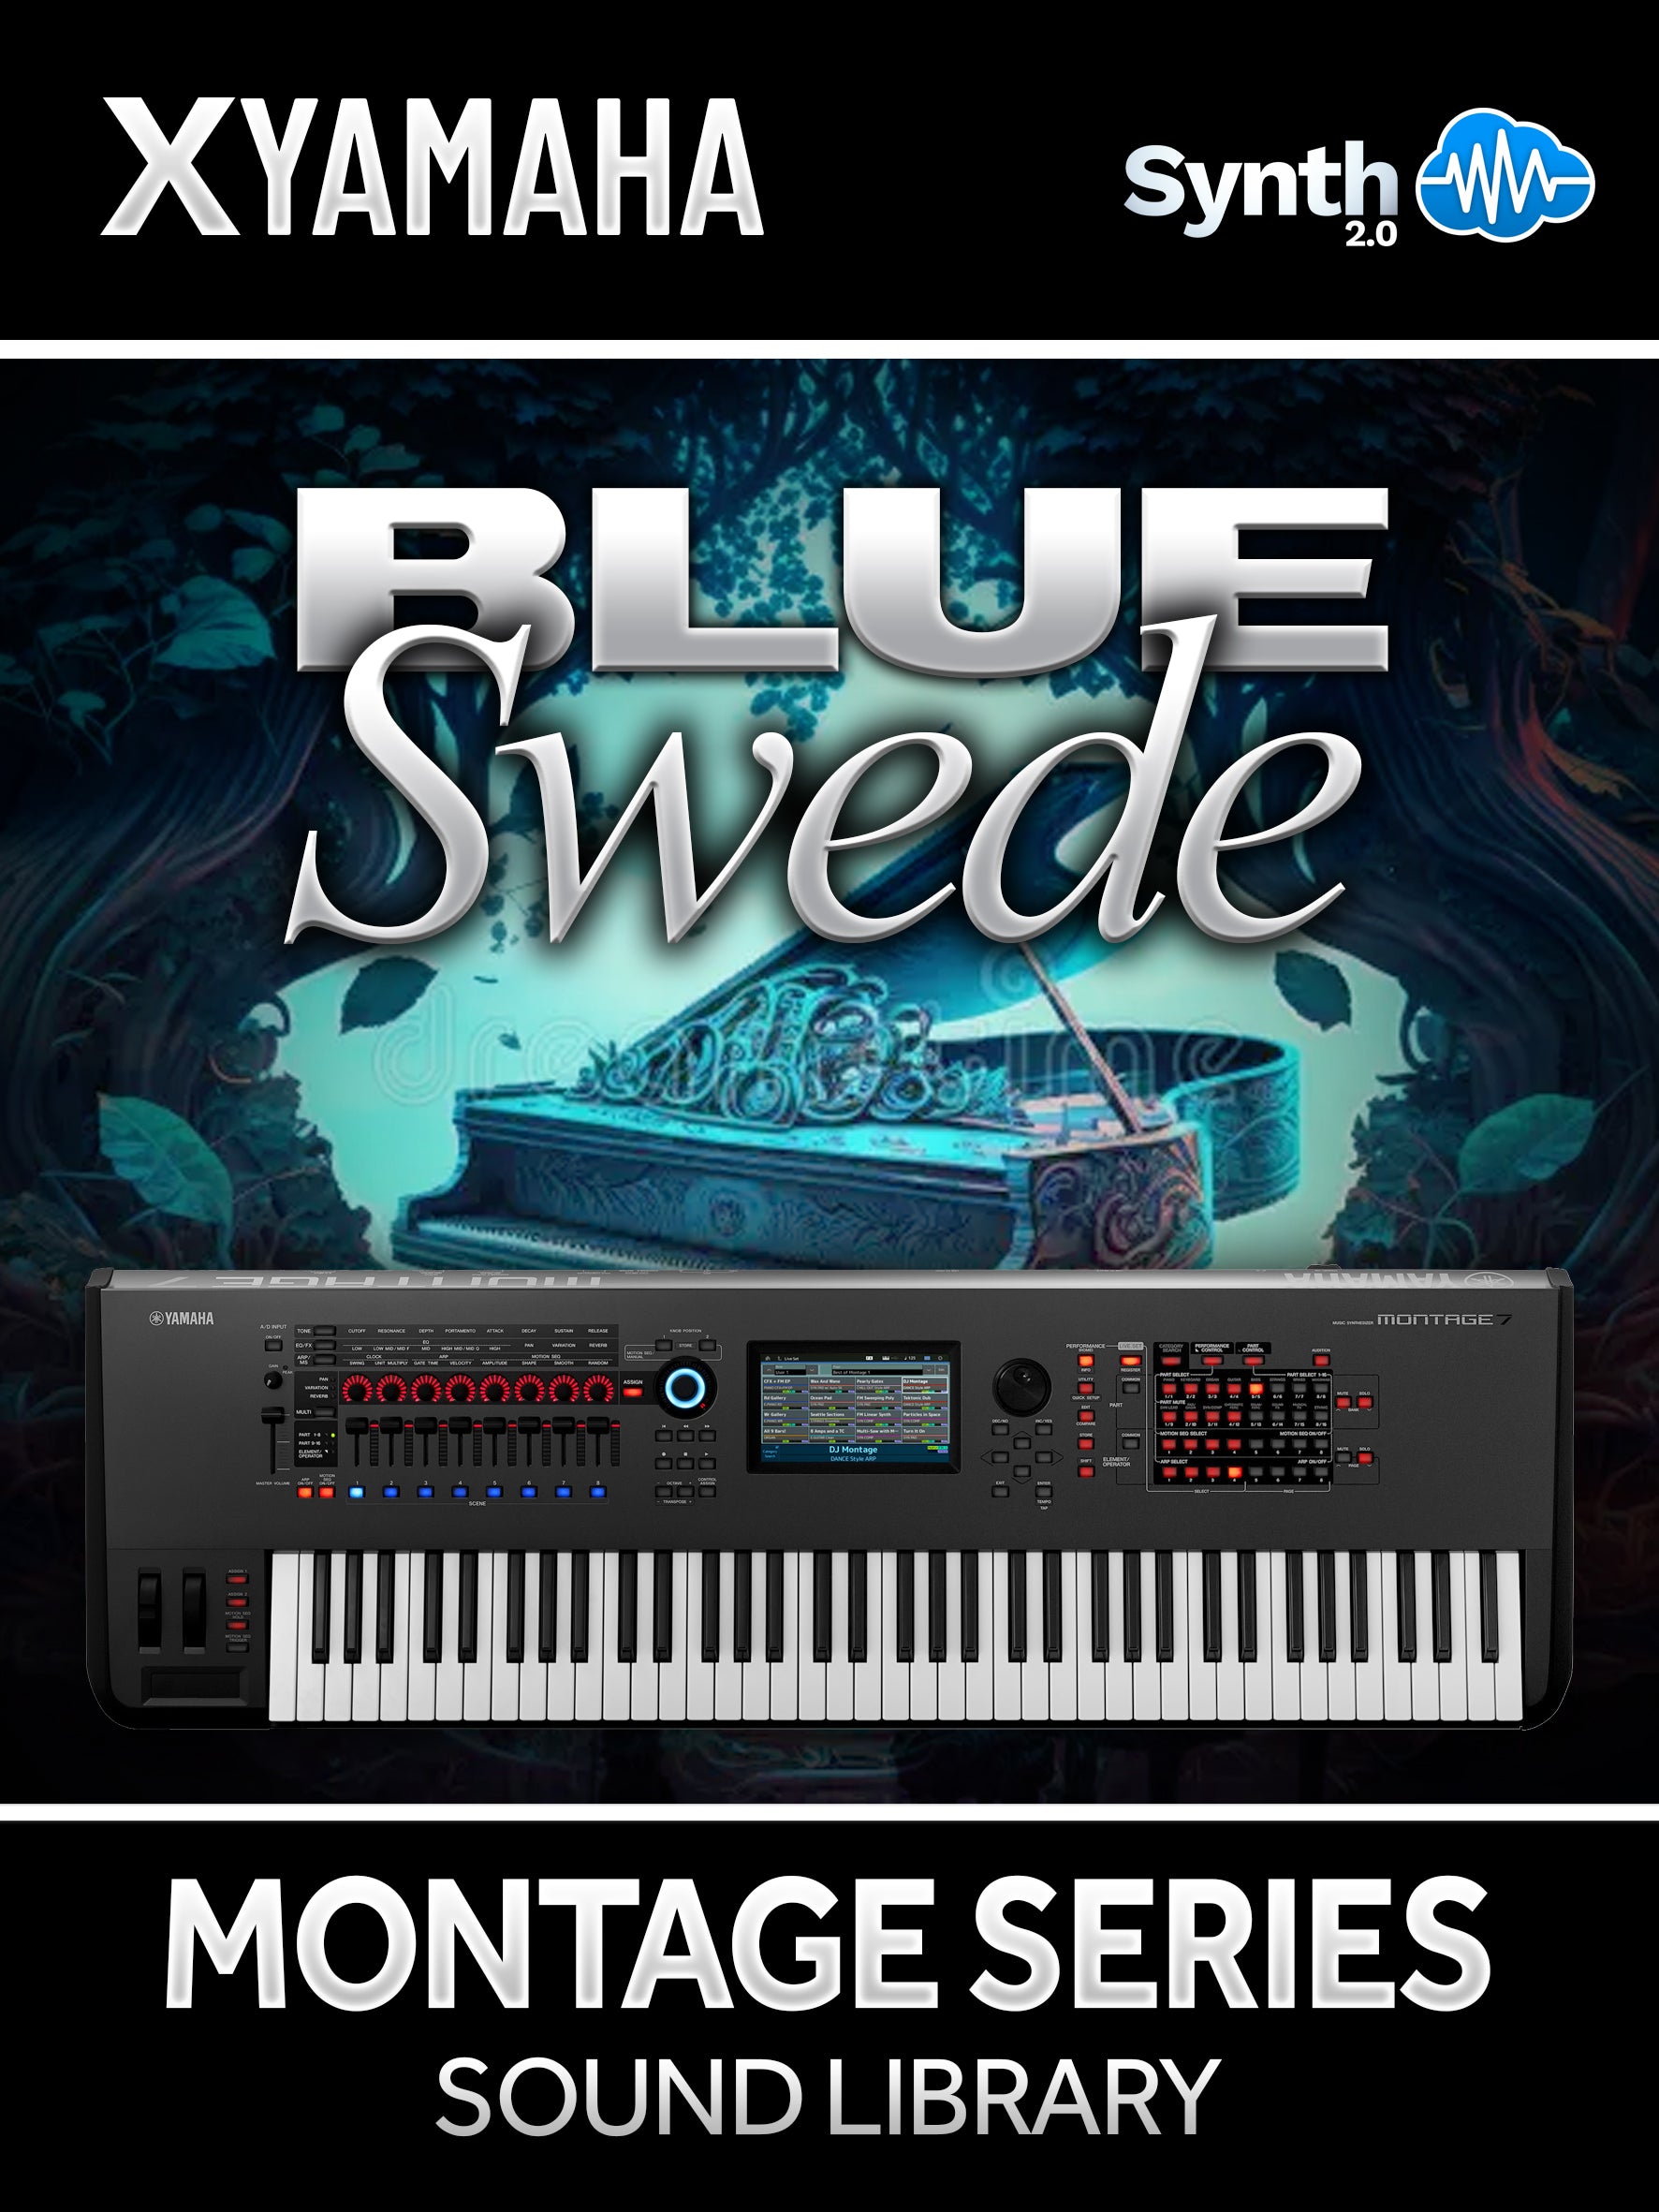 ITB012 - Blue Swede - Yamaha MONTAGE / M ( 8 presets )